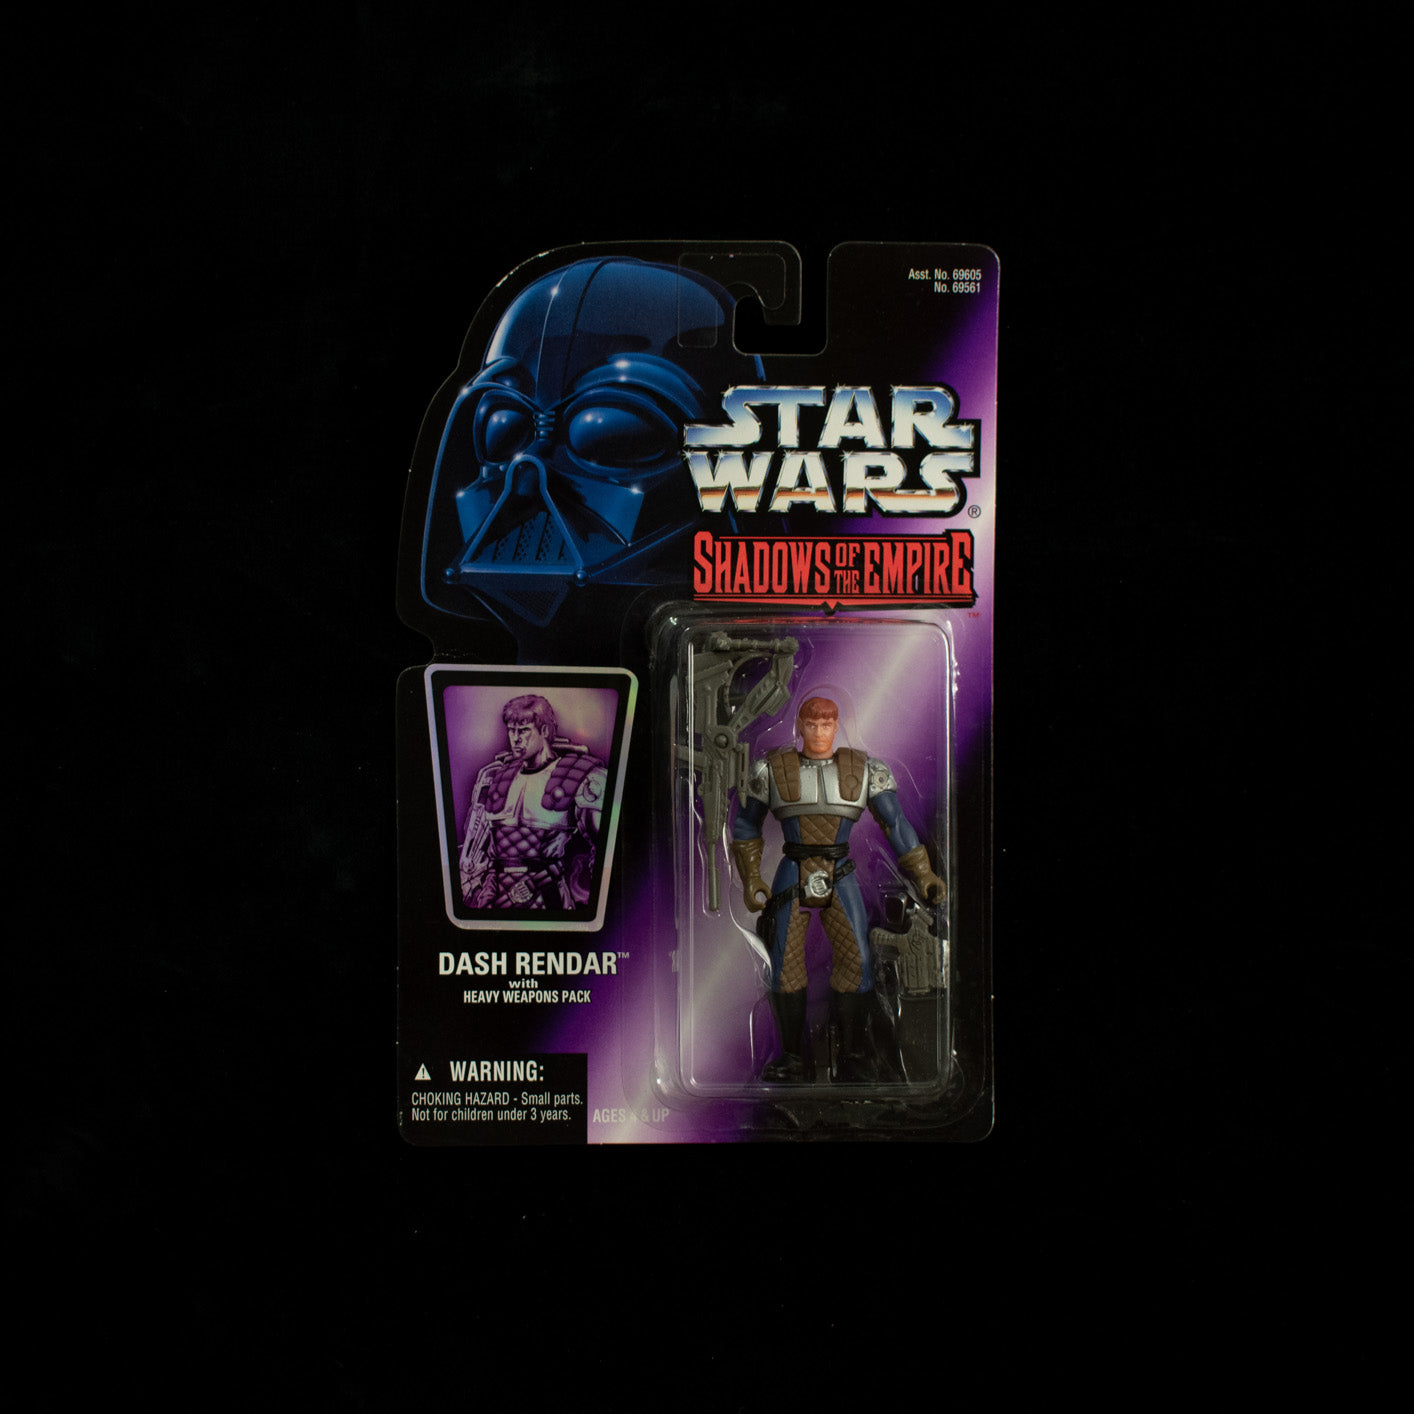 Dash Rendar Star Wars shadows of the empire 1996 New sealed